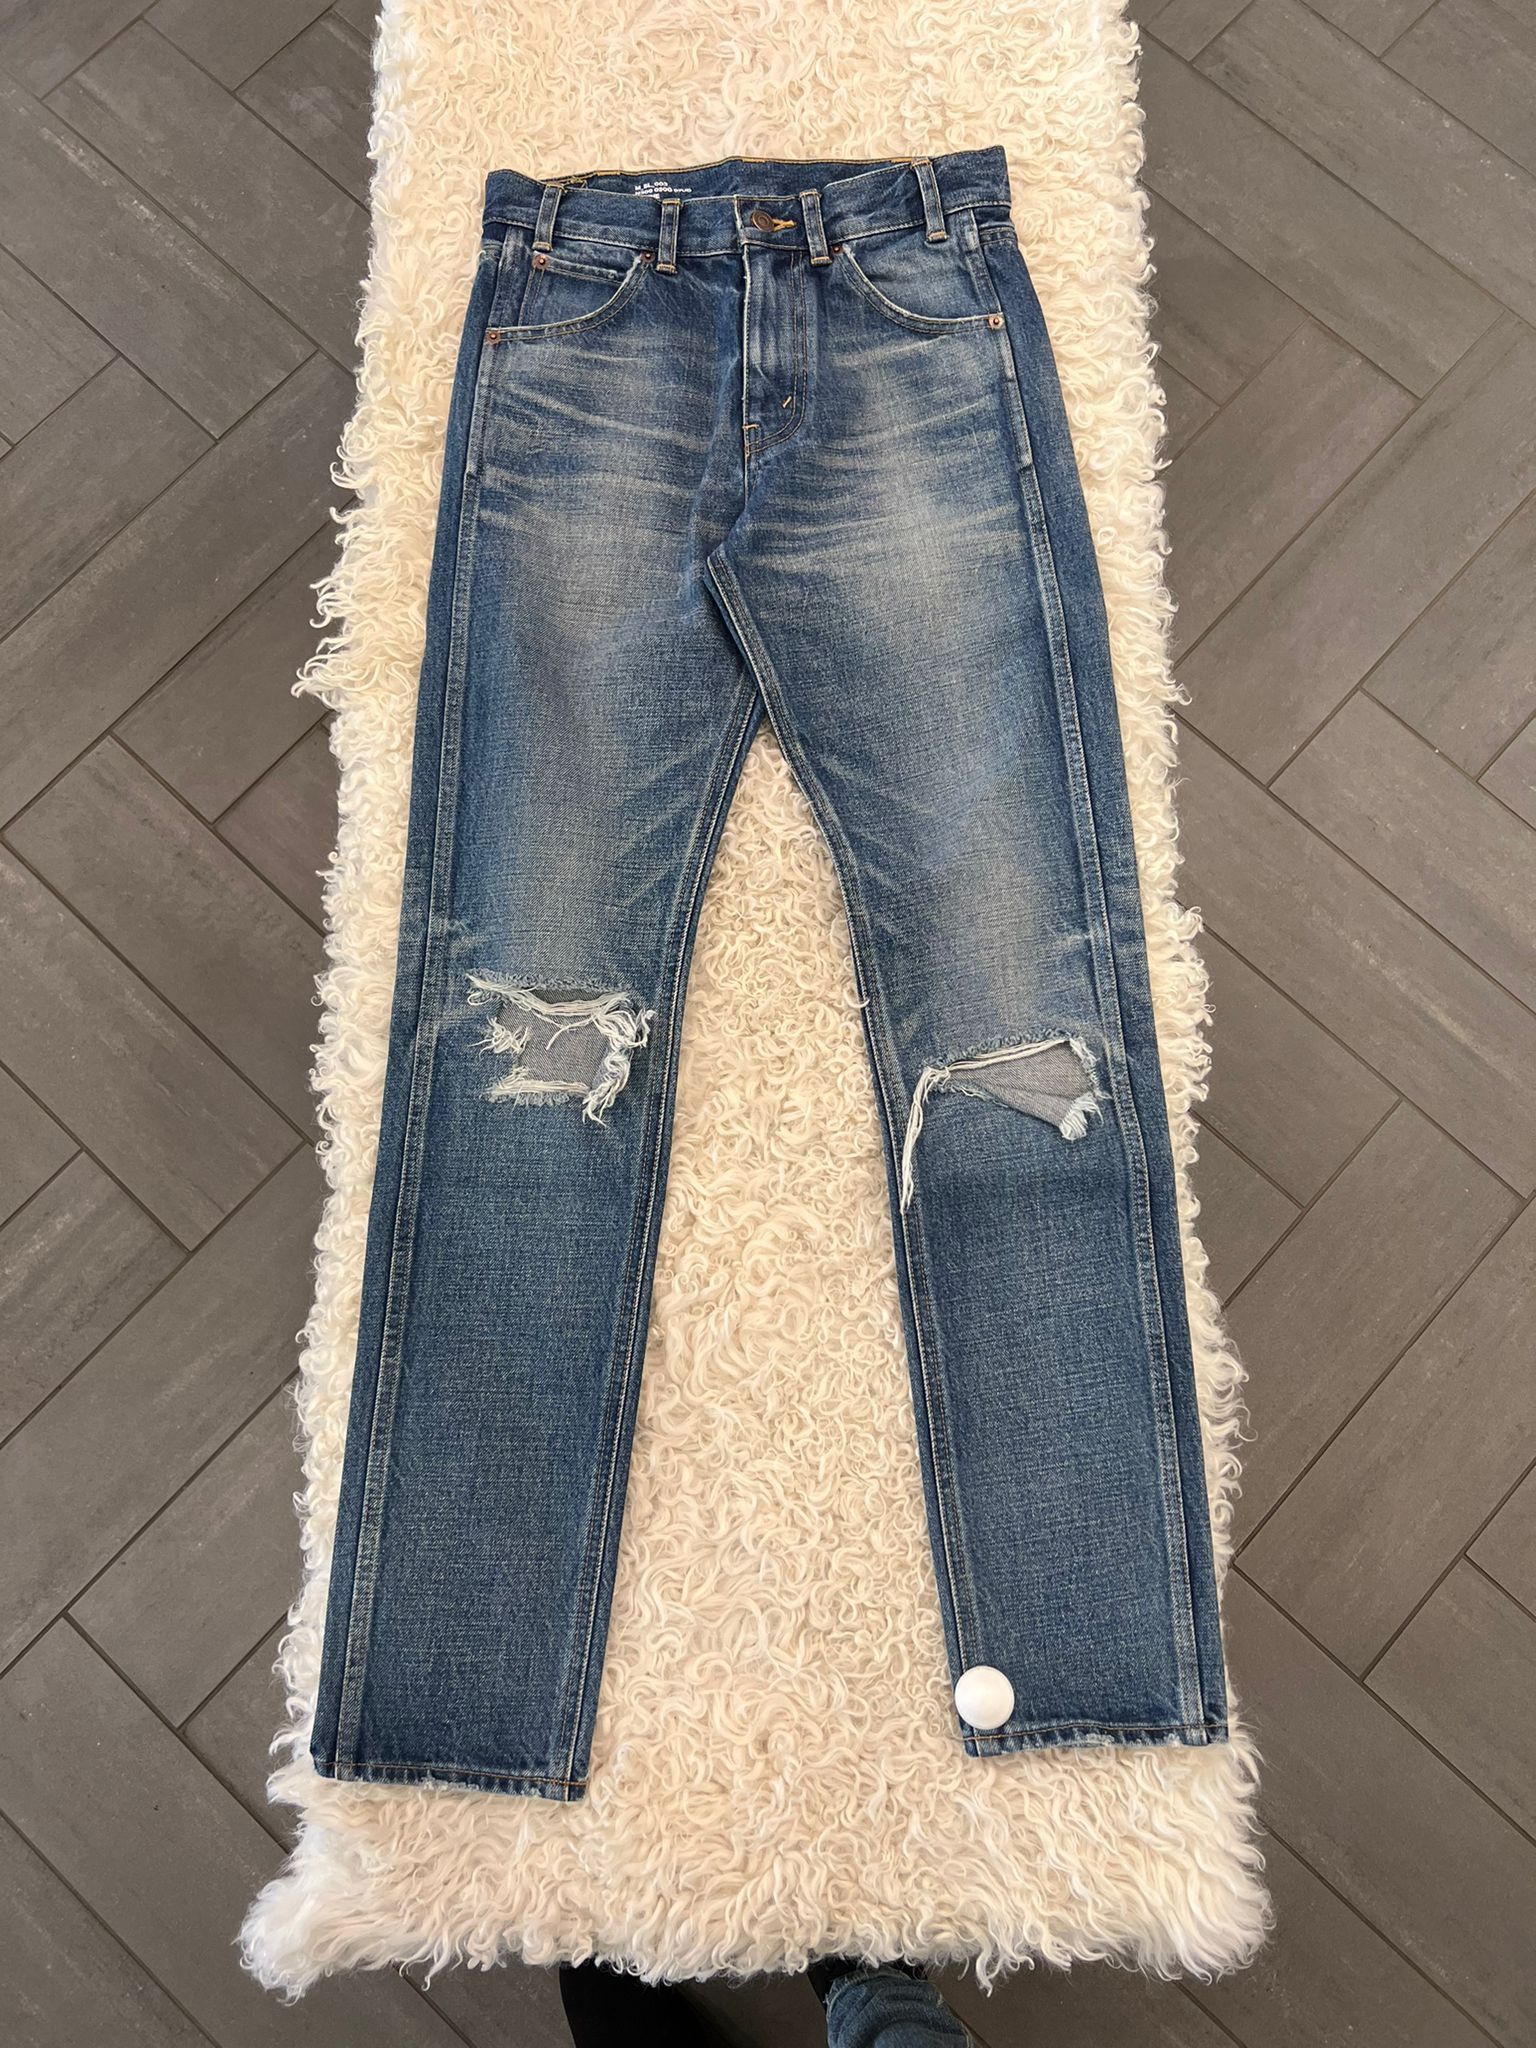 Celine Destroyed Slim Jeans in Union Wash | Grailed